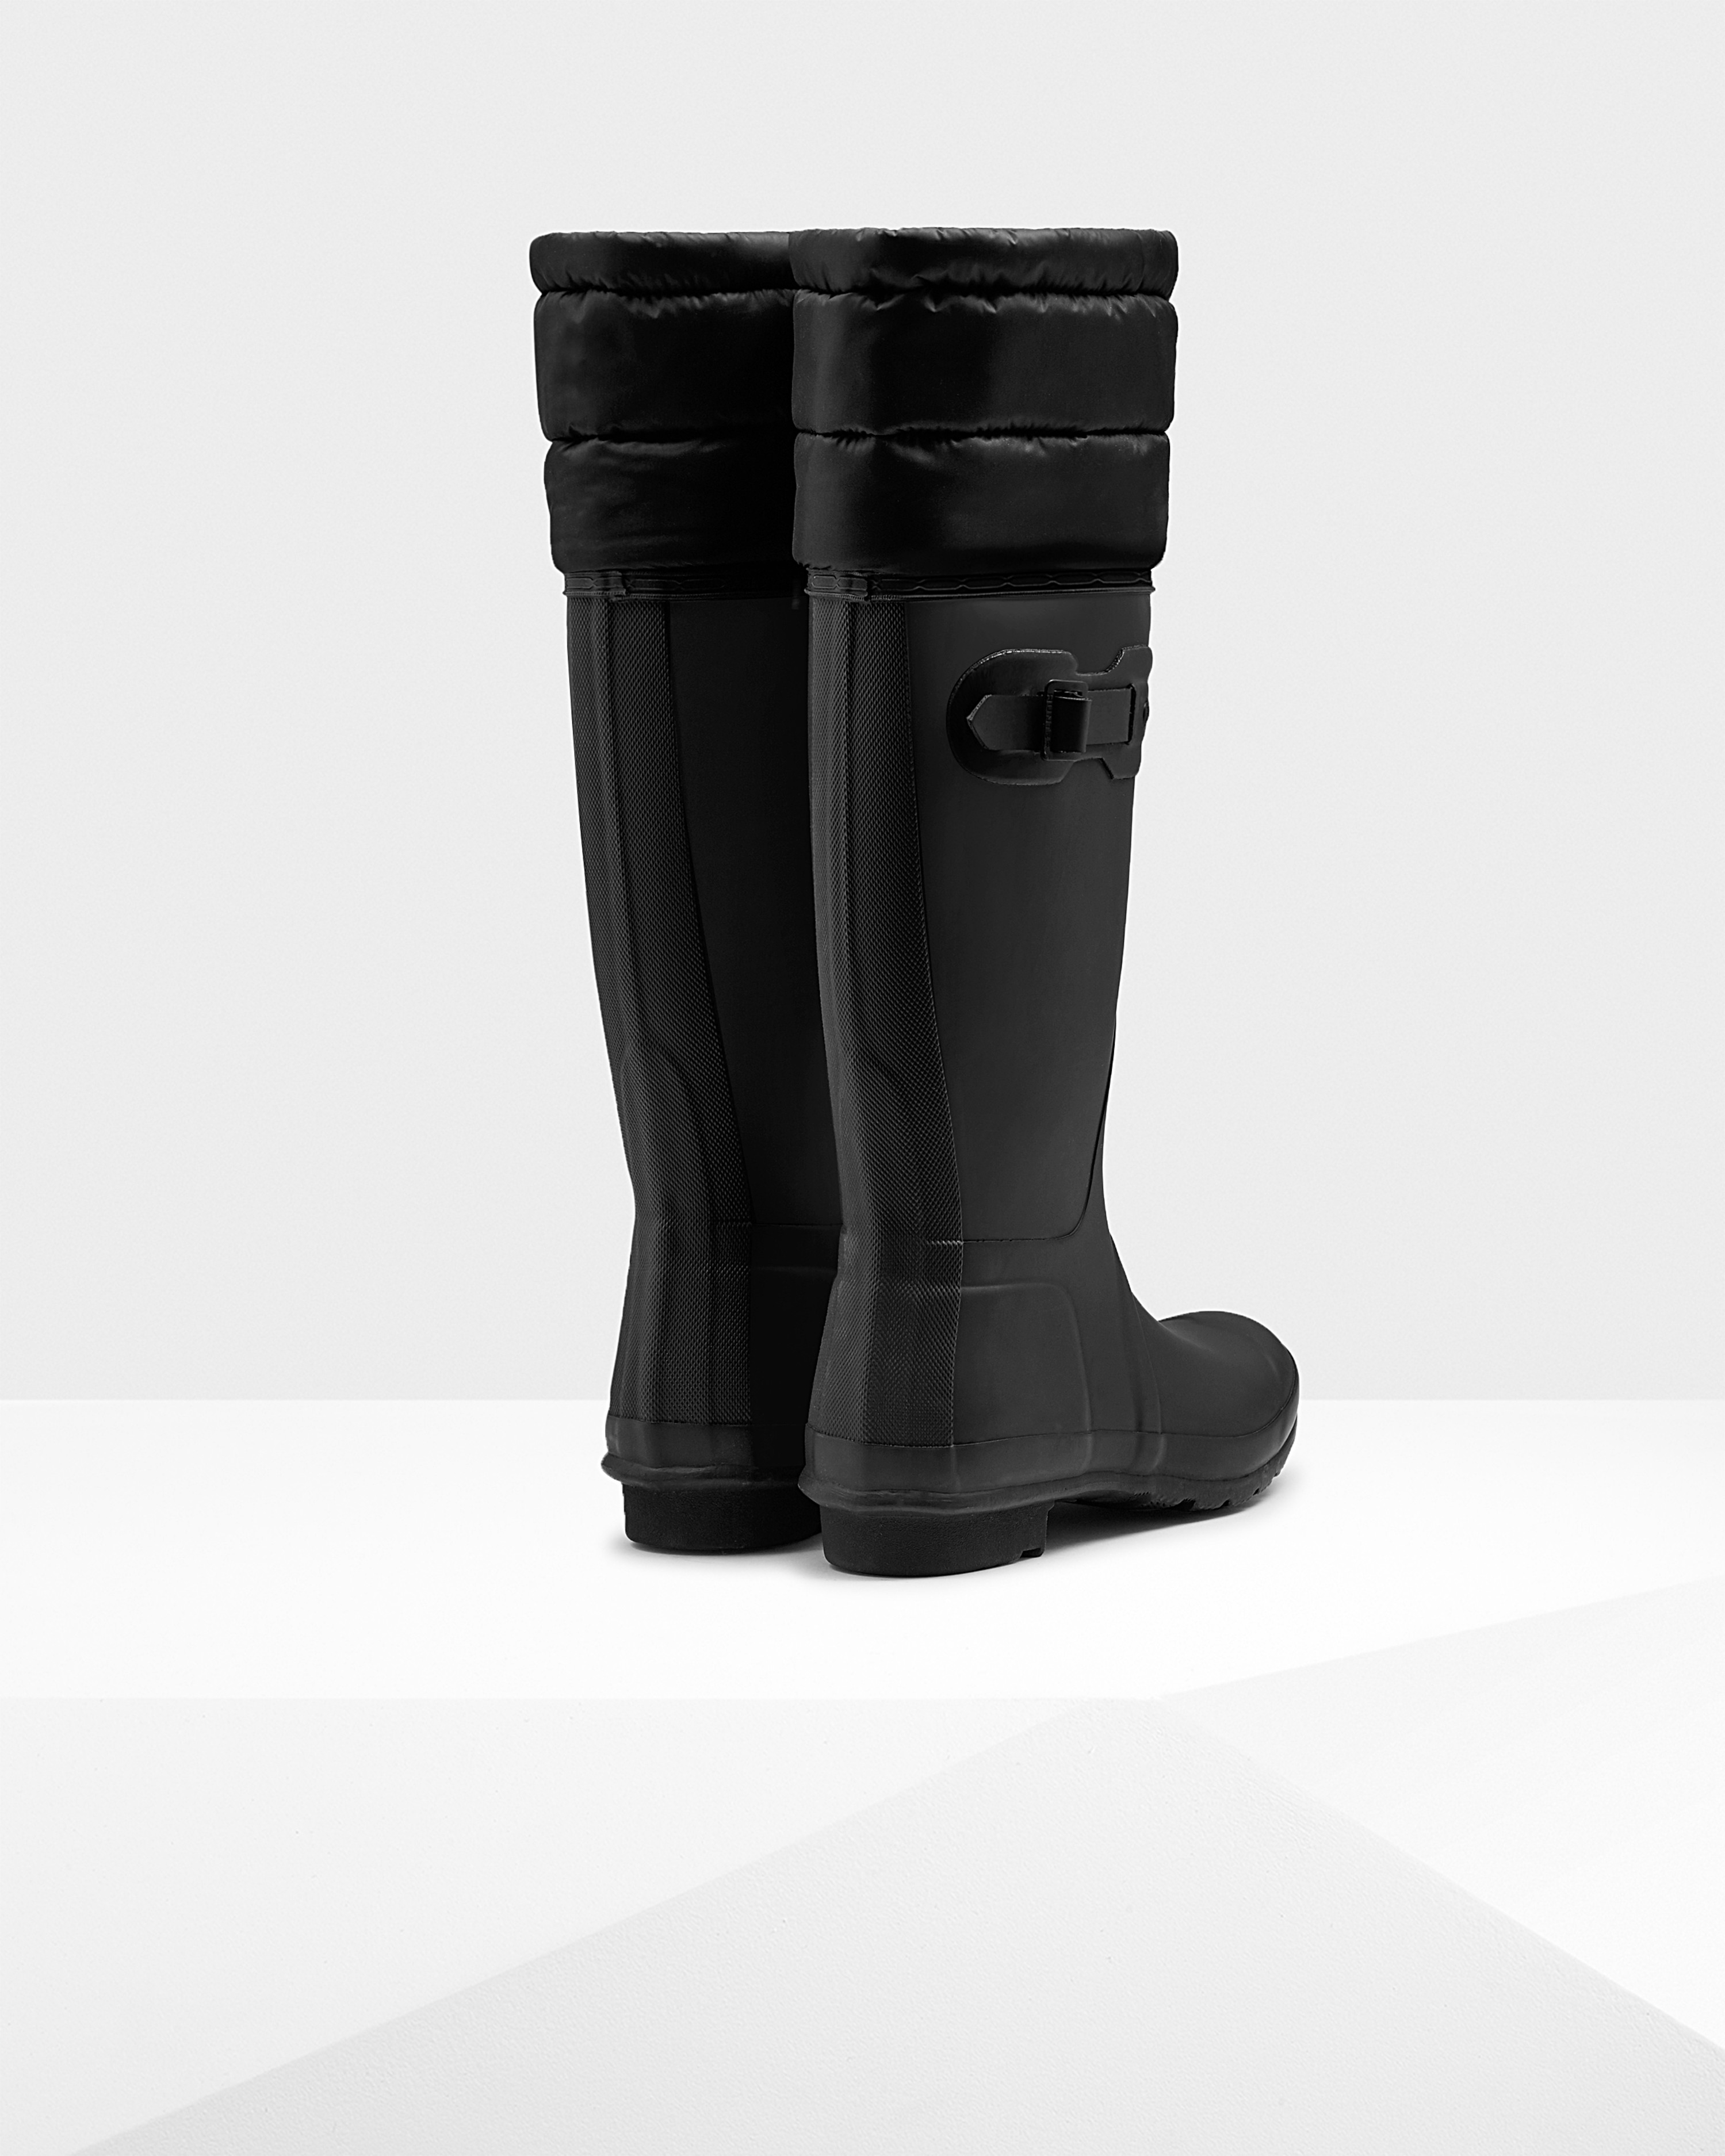 Lyst - Hunter Women's Original Tall Quilted Cuff Rain Boots in Black